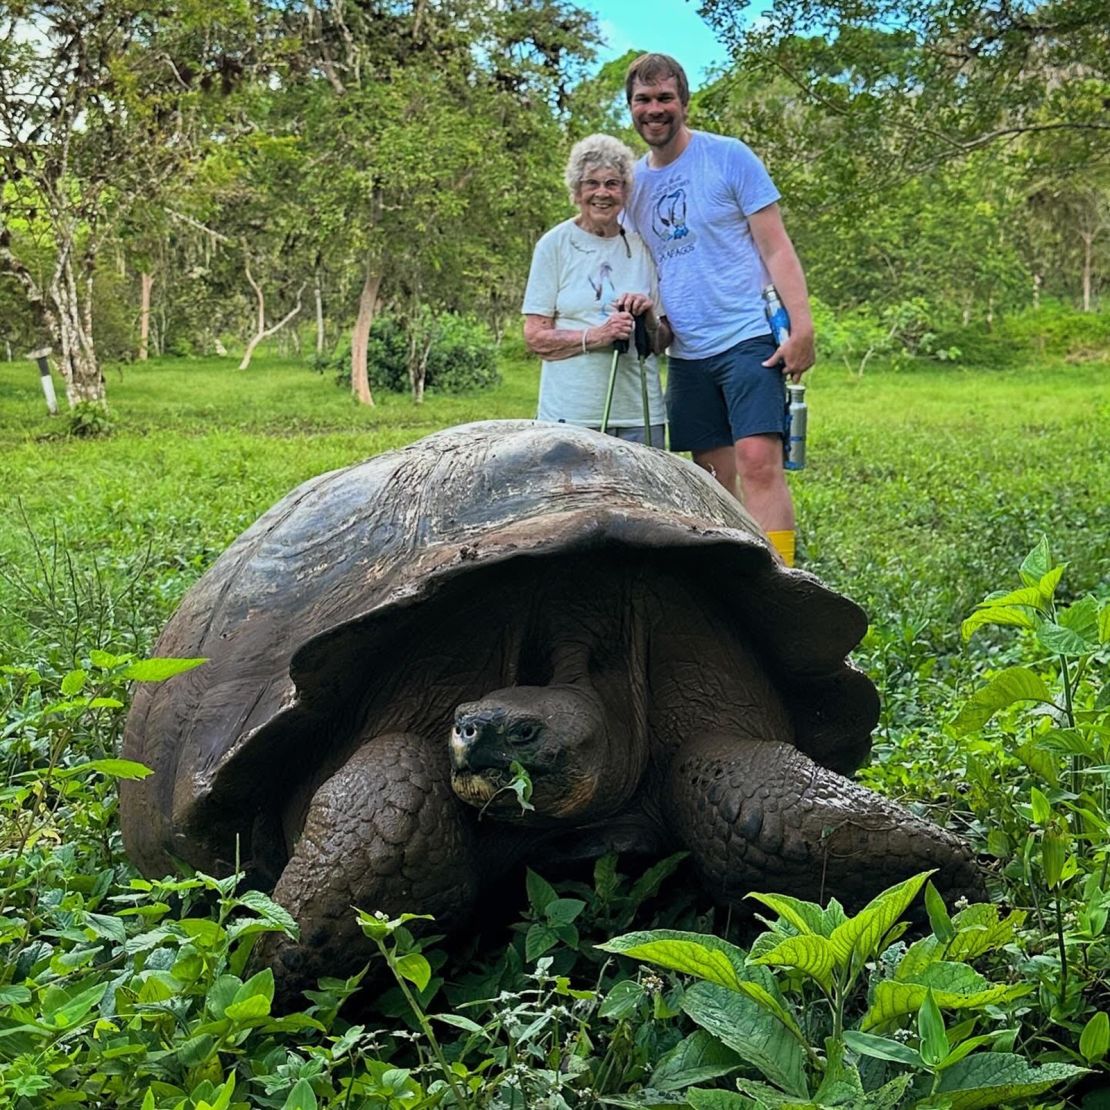 The grandma-grandson duo visited the Galápagos Islands in Ecuador earlier this year.